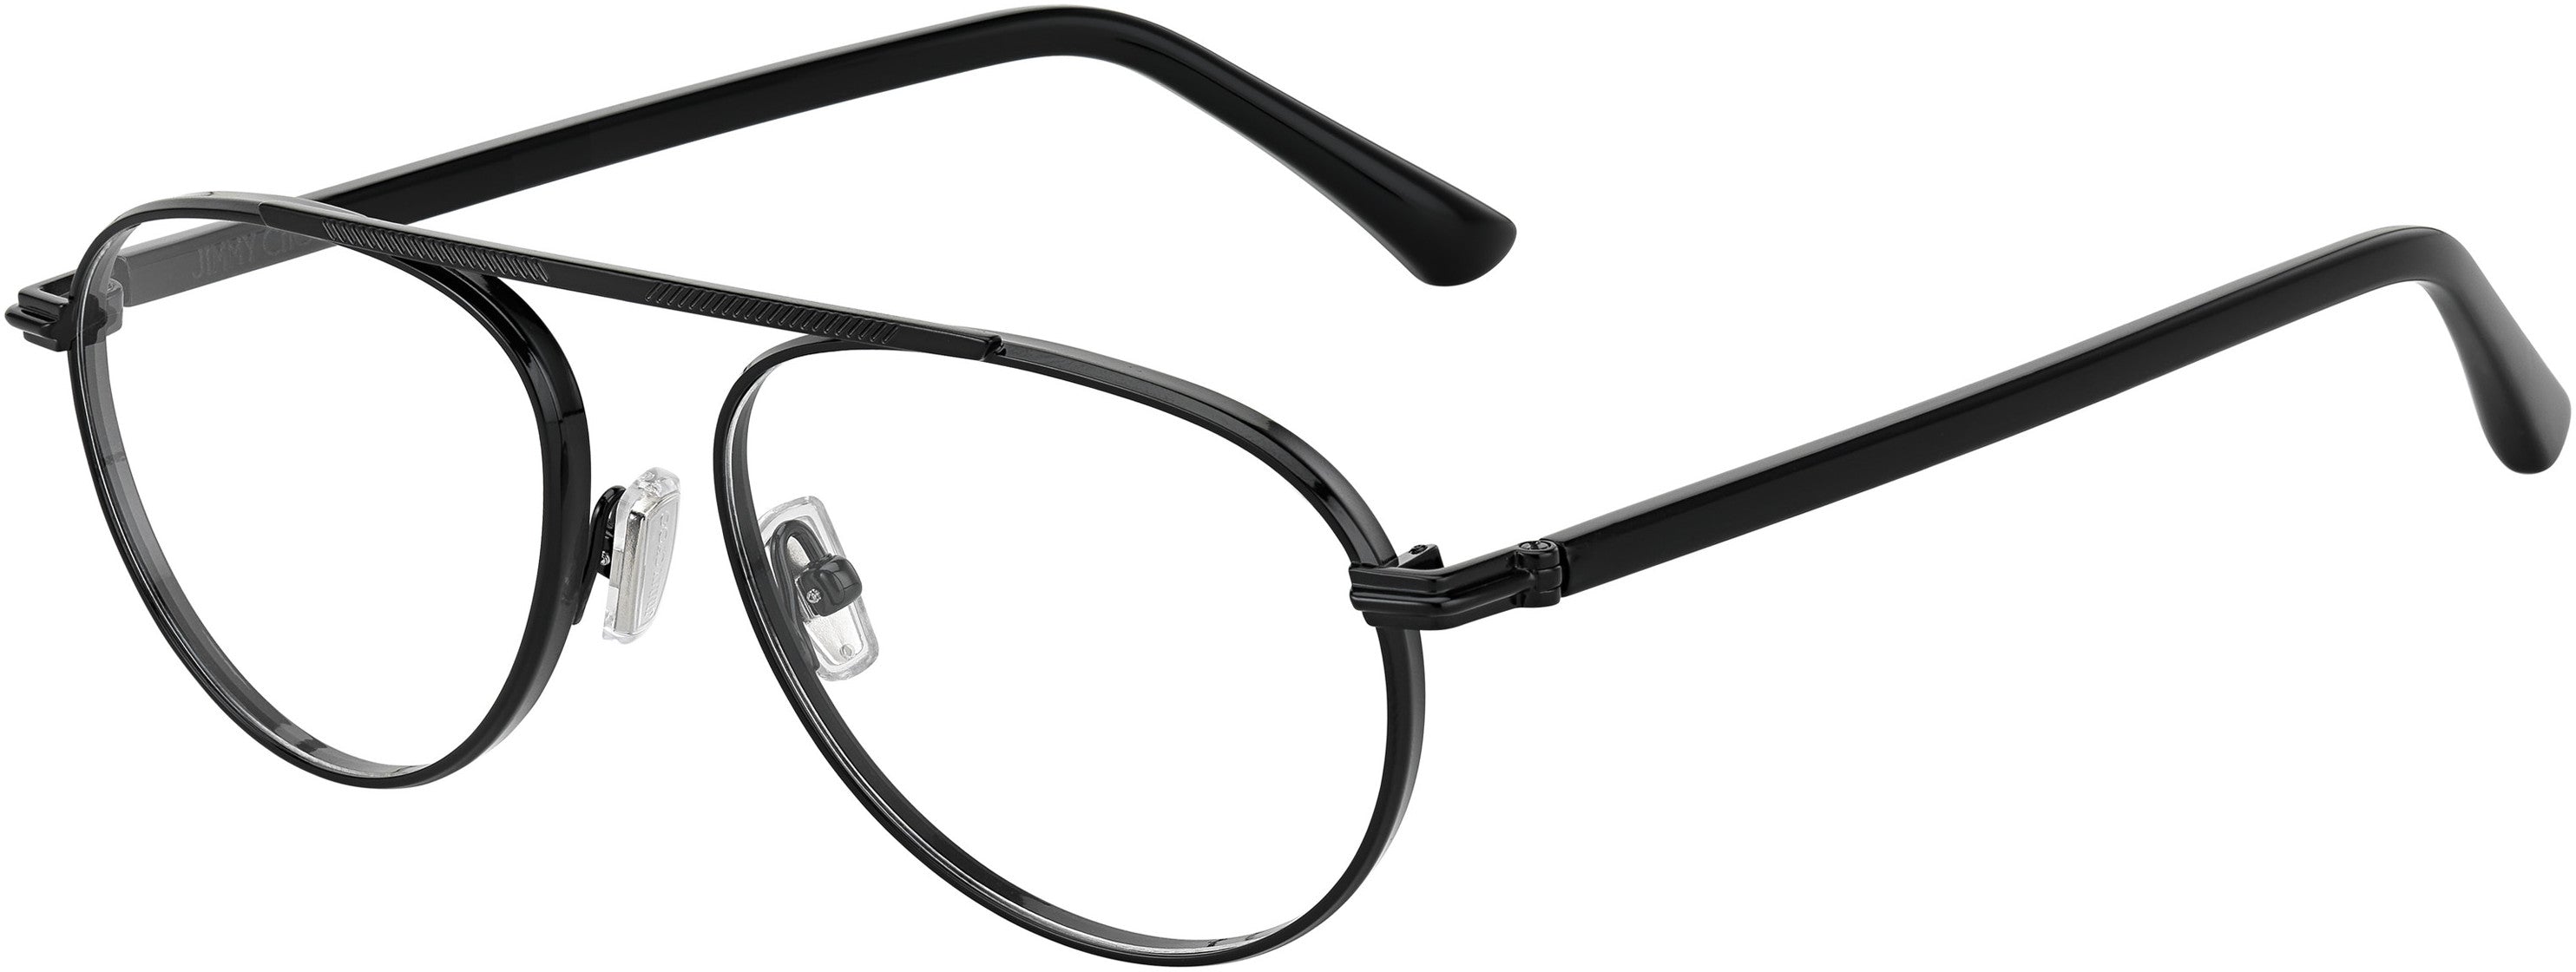  Jimmy Choo 003 Oval Modified Eyeglasses 0807-0807  Black (00 Demo Lens)